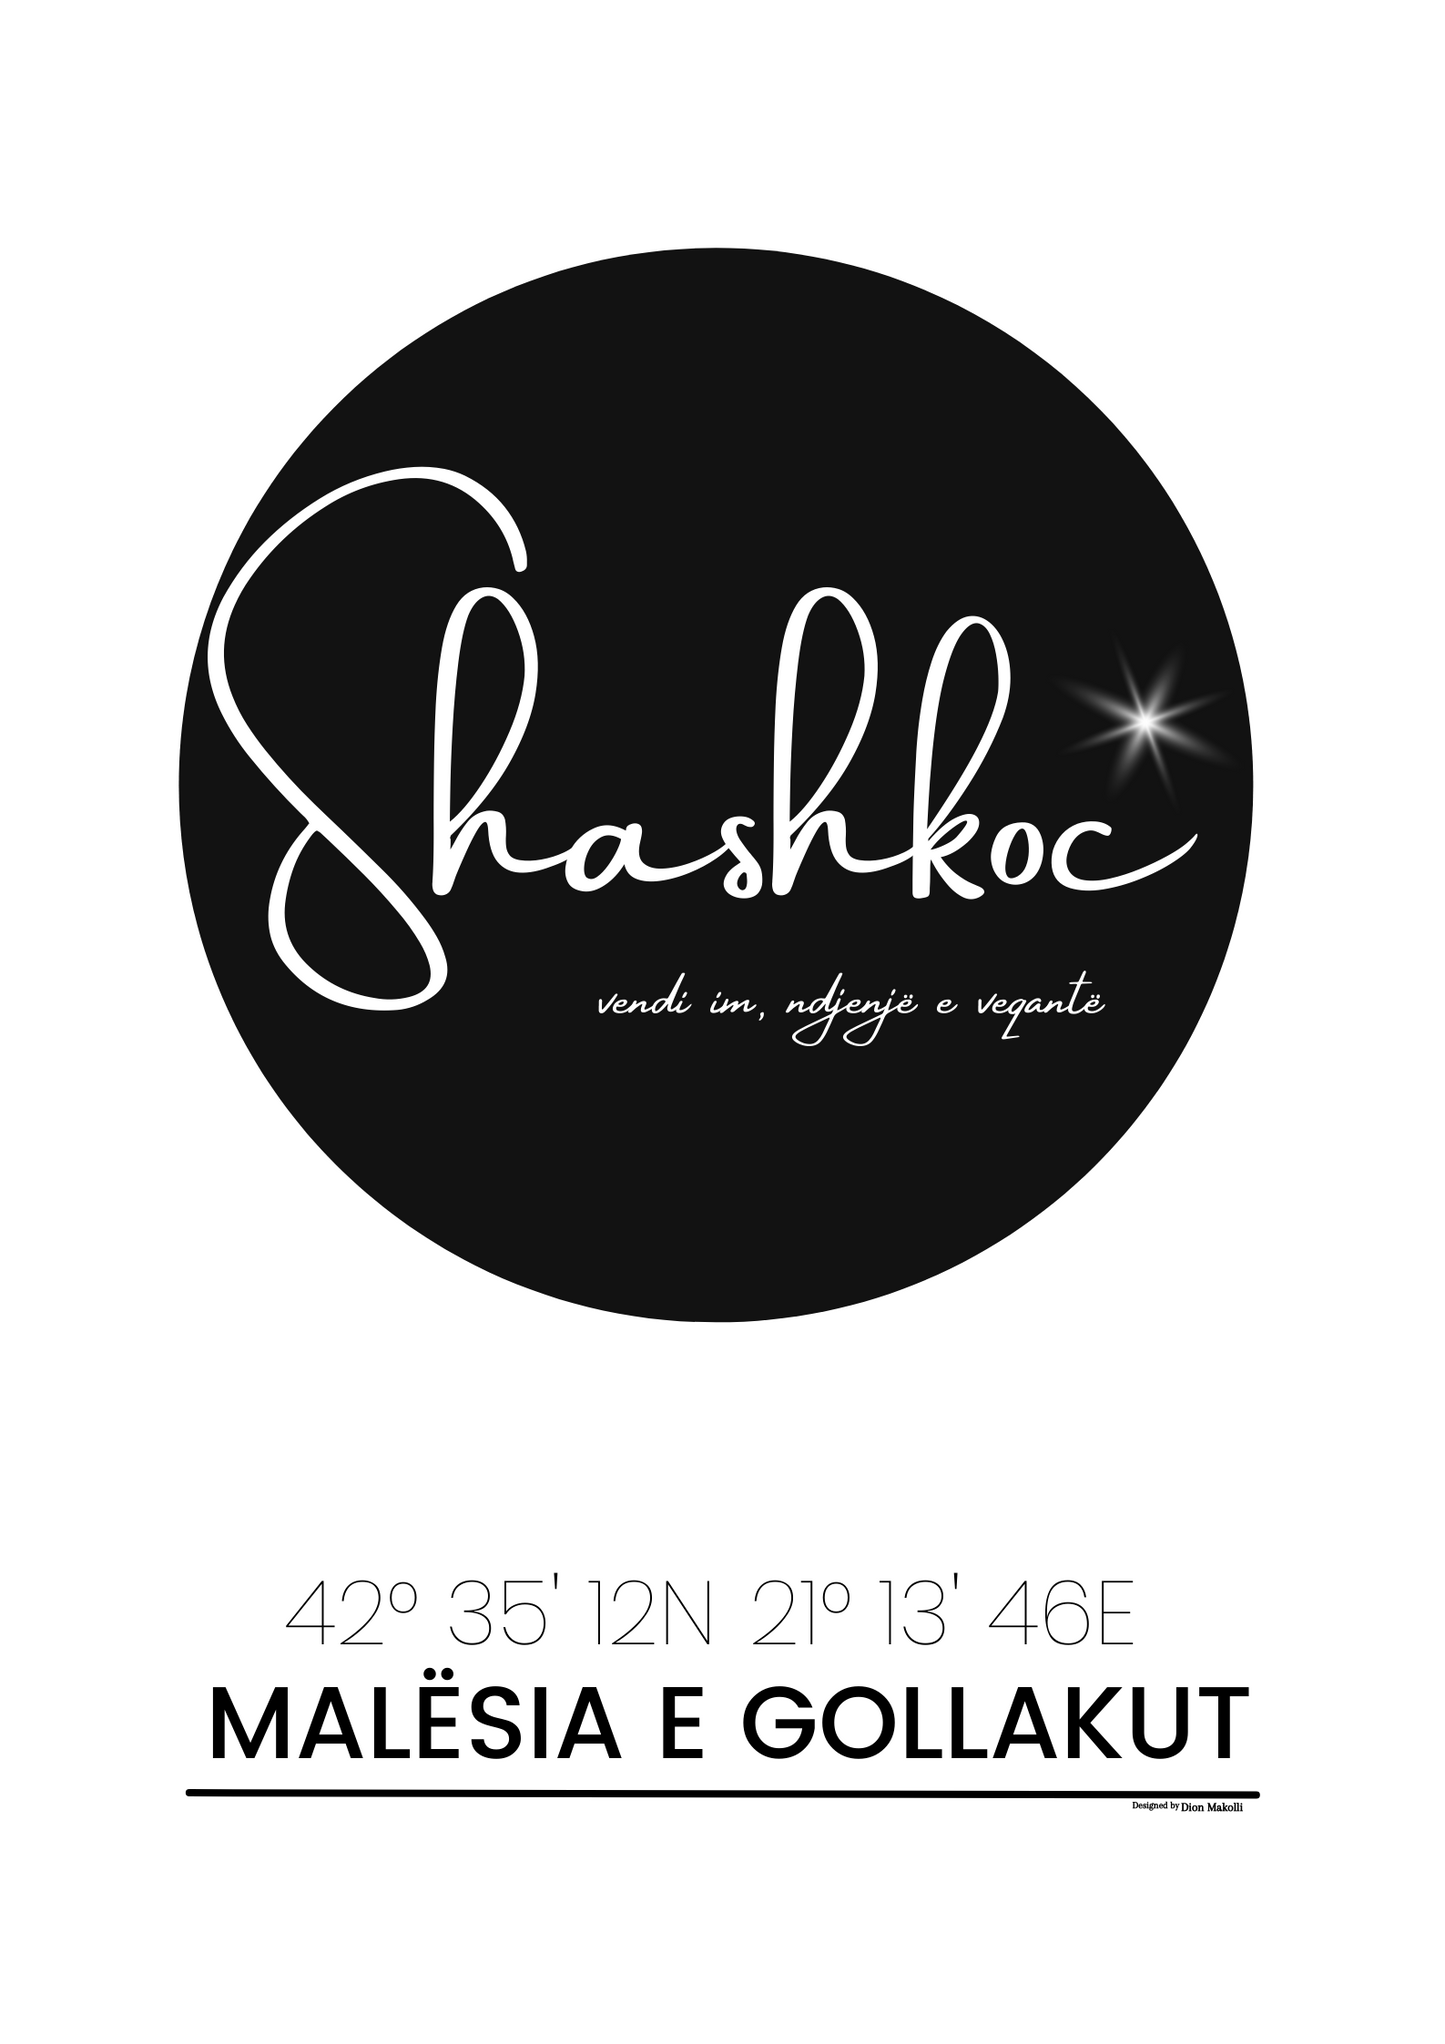 Shashkoc